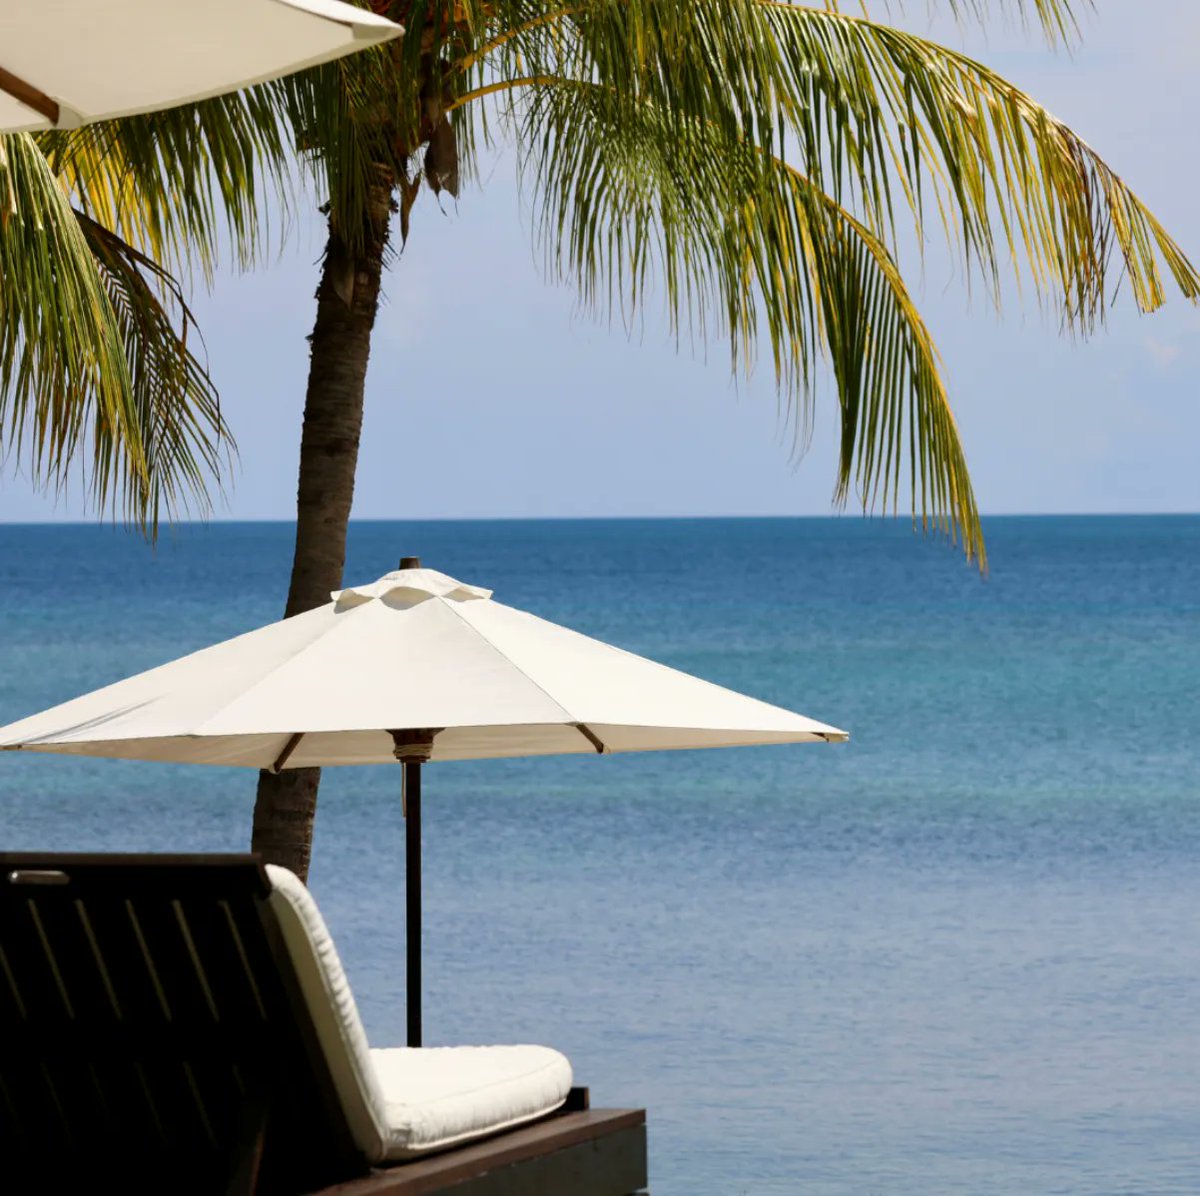 Pure Relaxation 🌊 #Lombok #LombokIsland